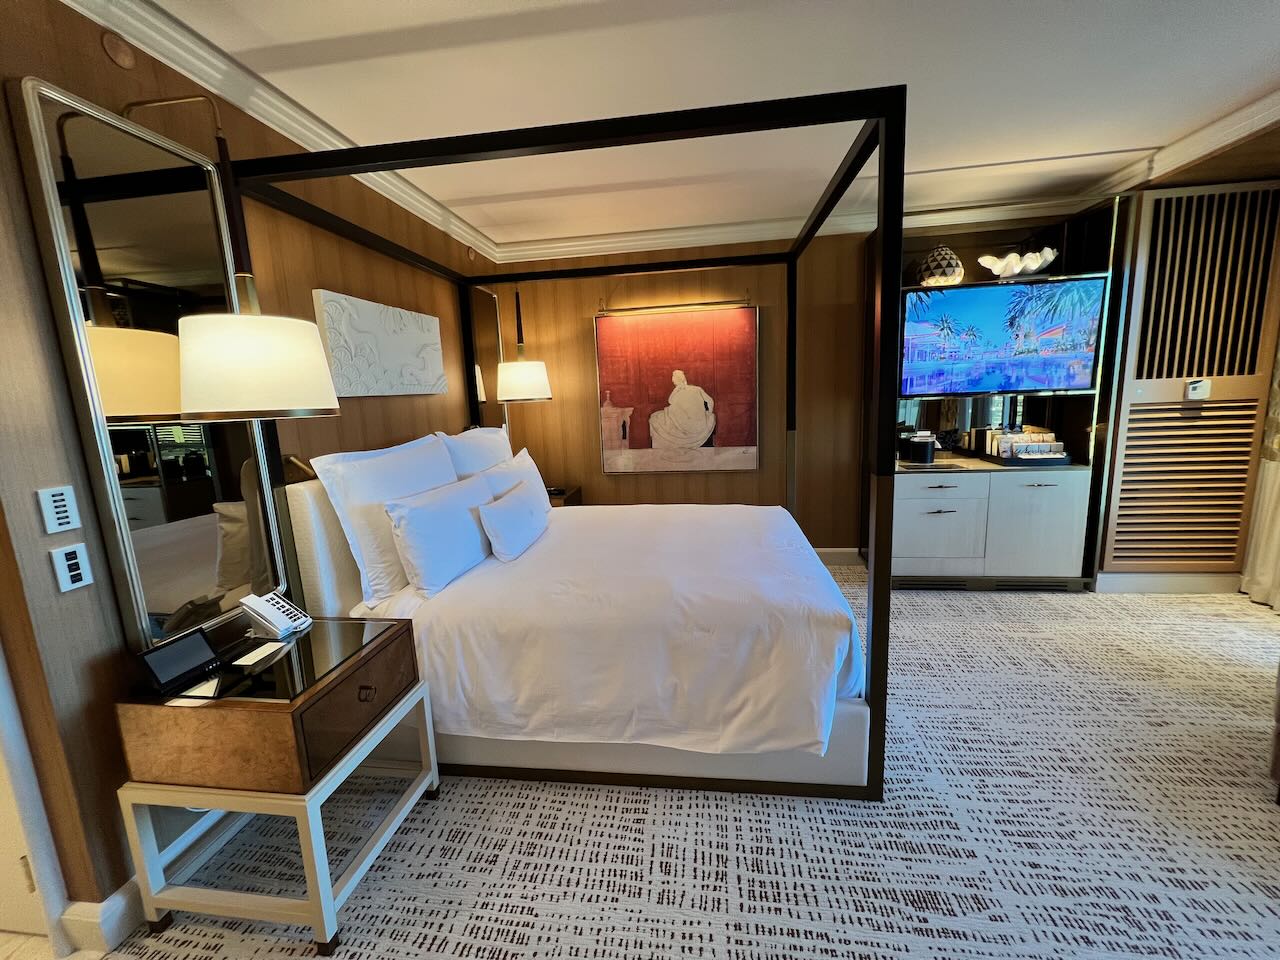 New Wynn Las Vegas Rooms - king bed